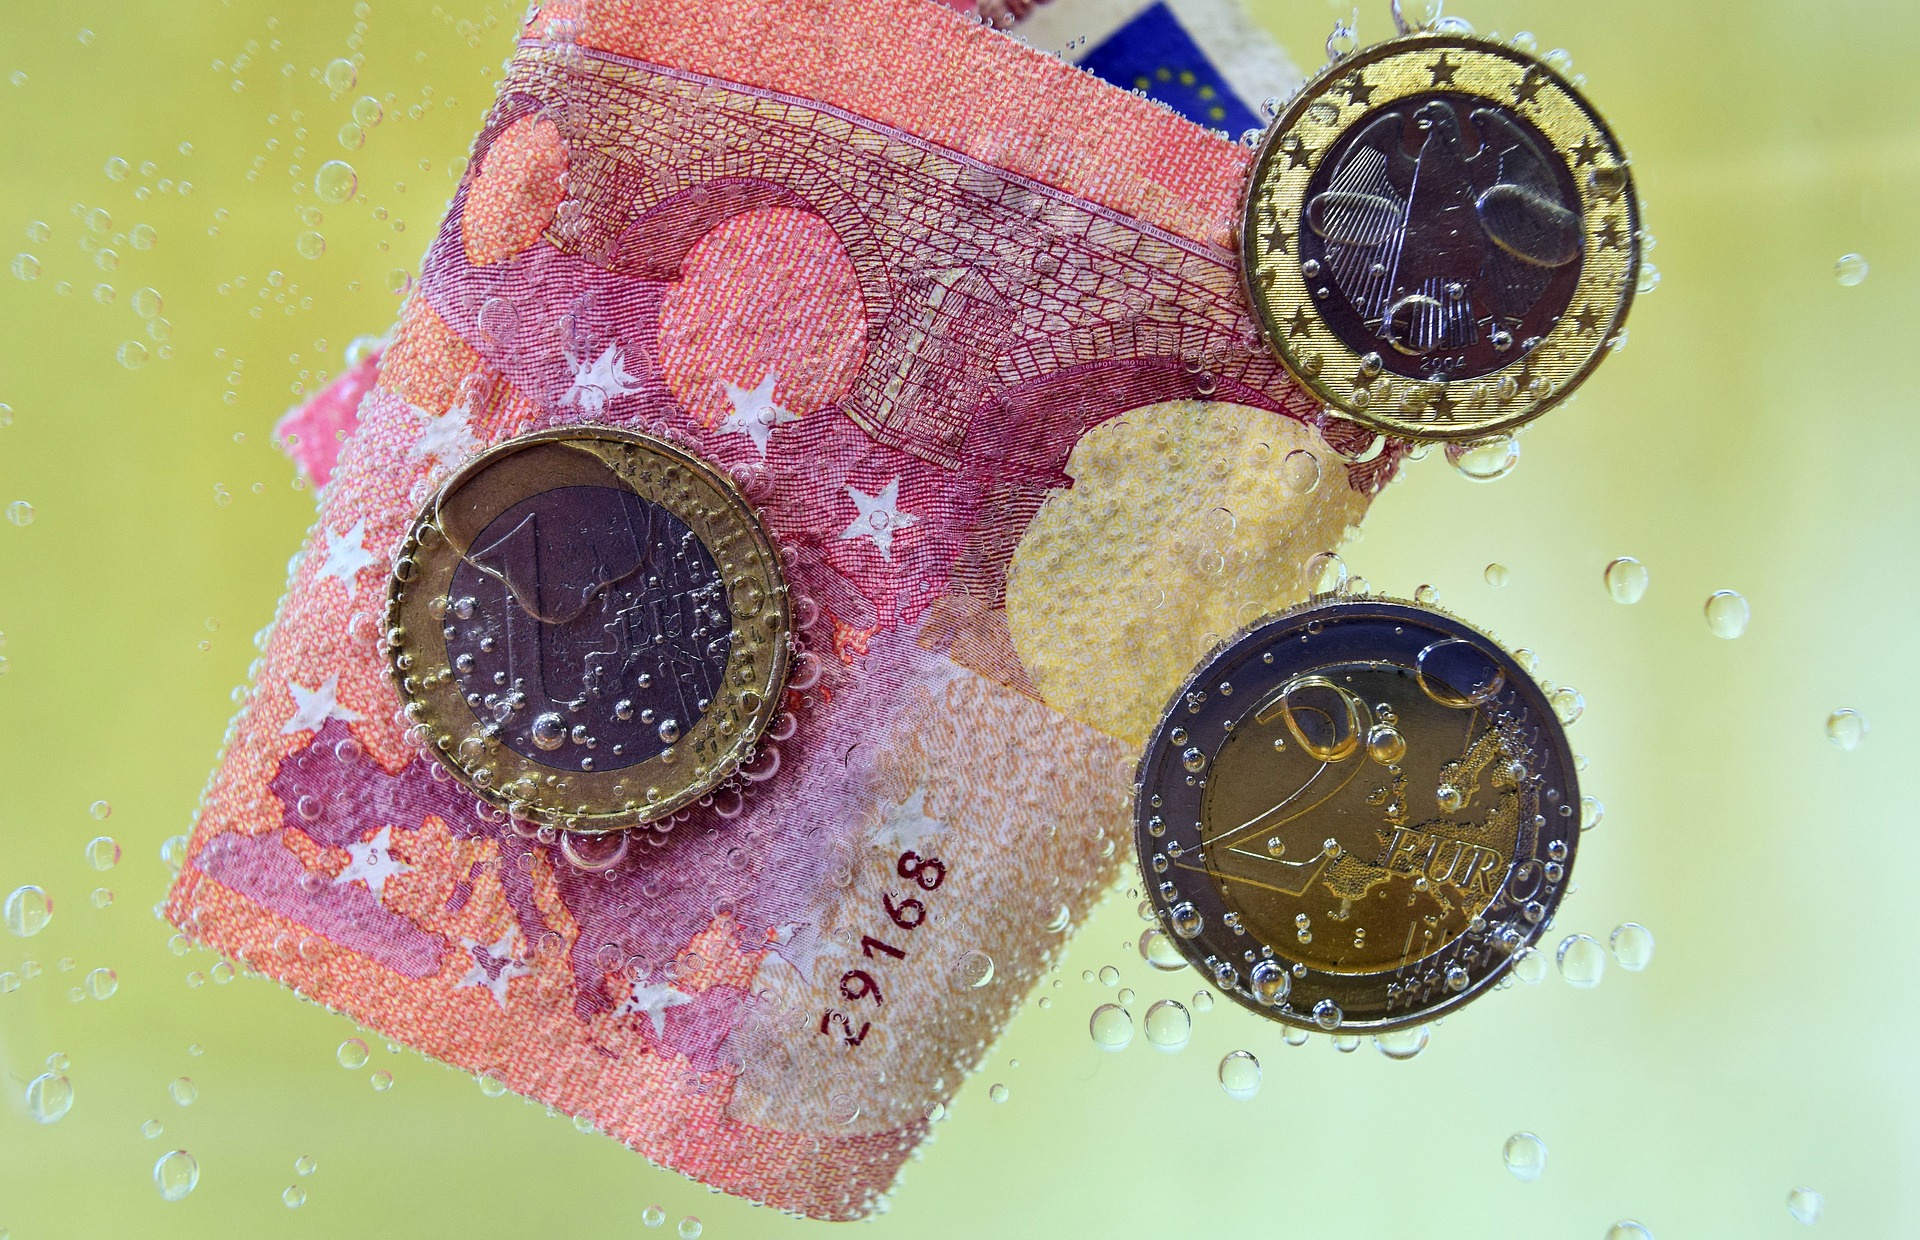 5th EU Anti-Money Laundering Directive published